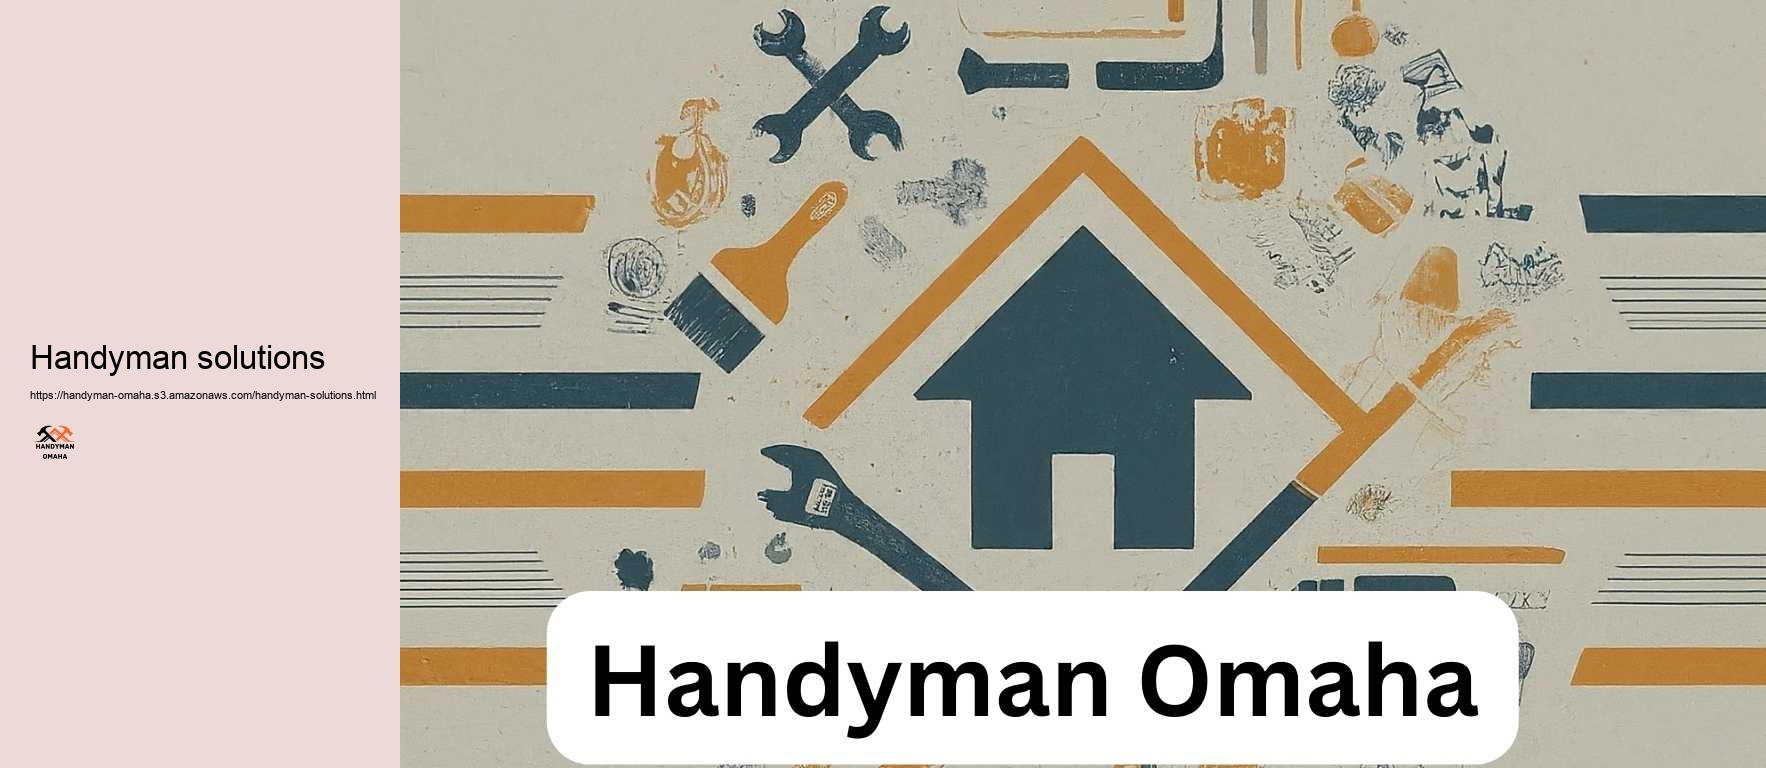 Handyman solutions